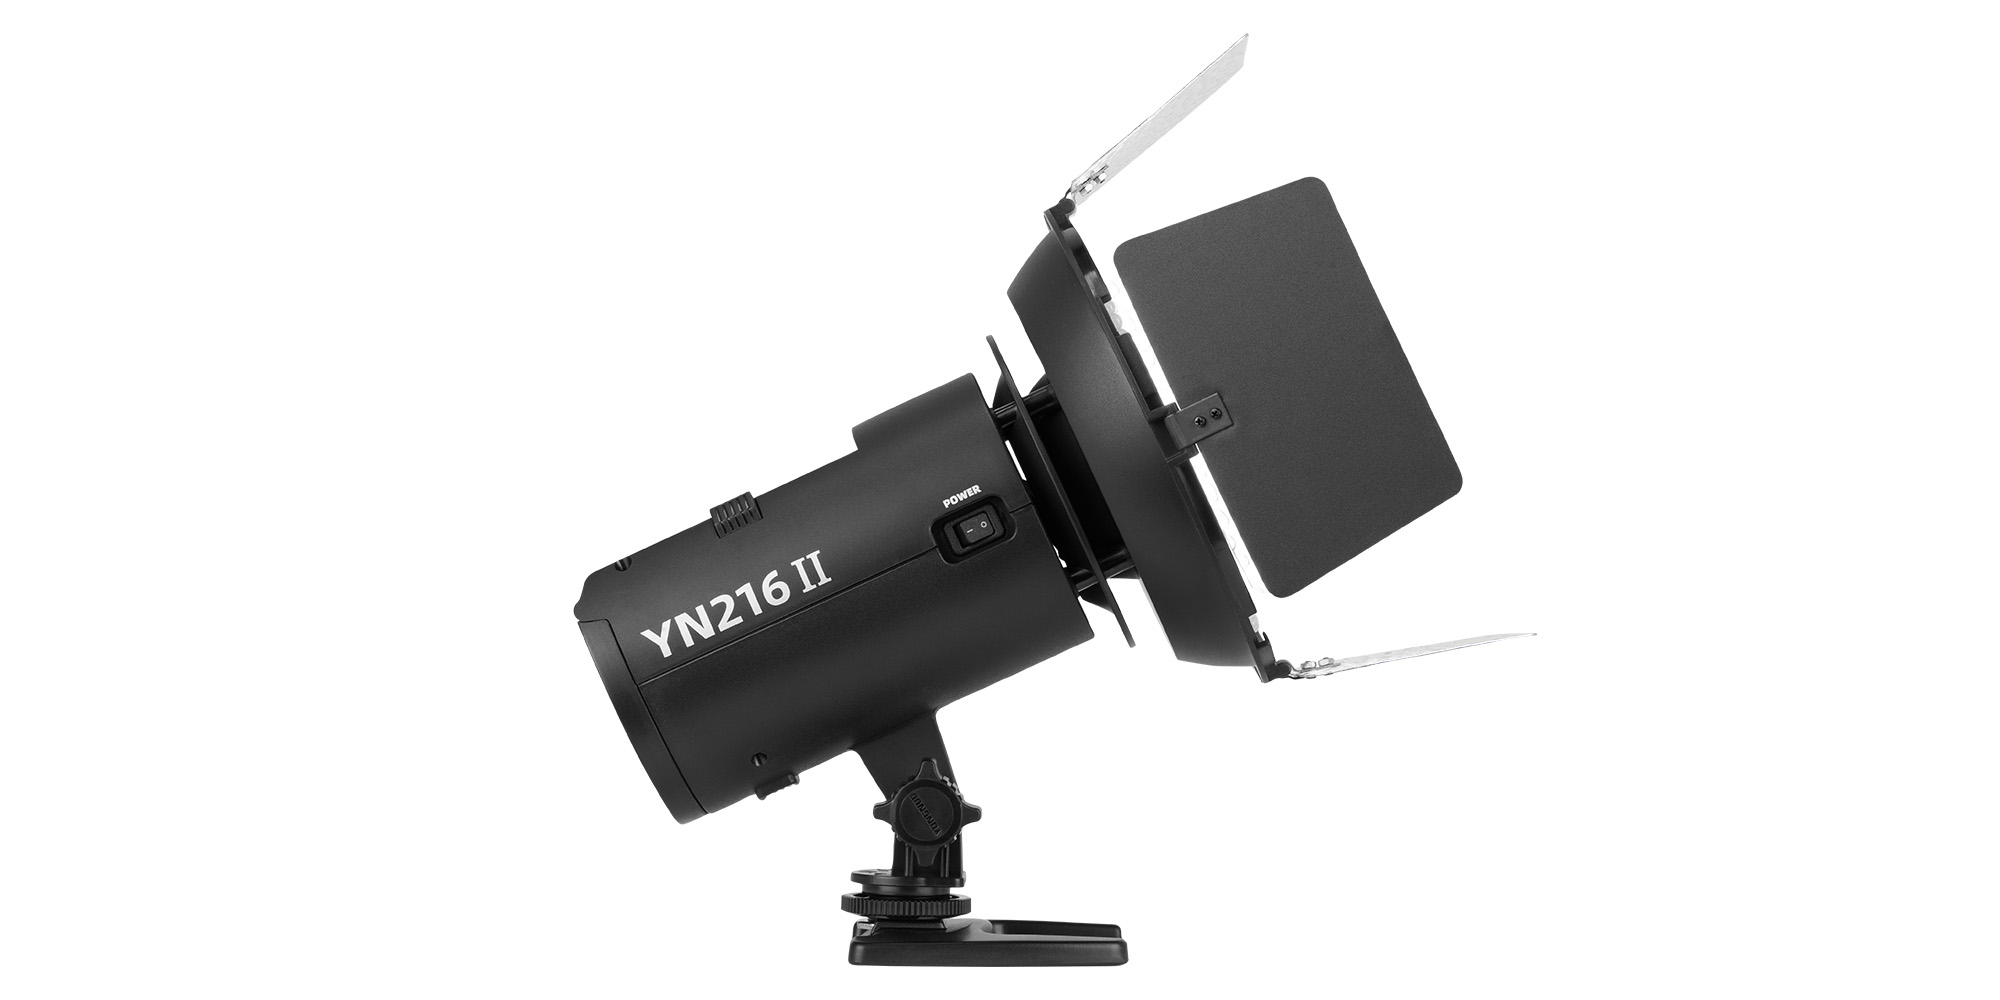 Lampa LED Yongnuo YN216 II - WB (2700 K - 8000 K) - Wszechstronne źródło światła